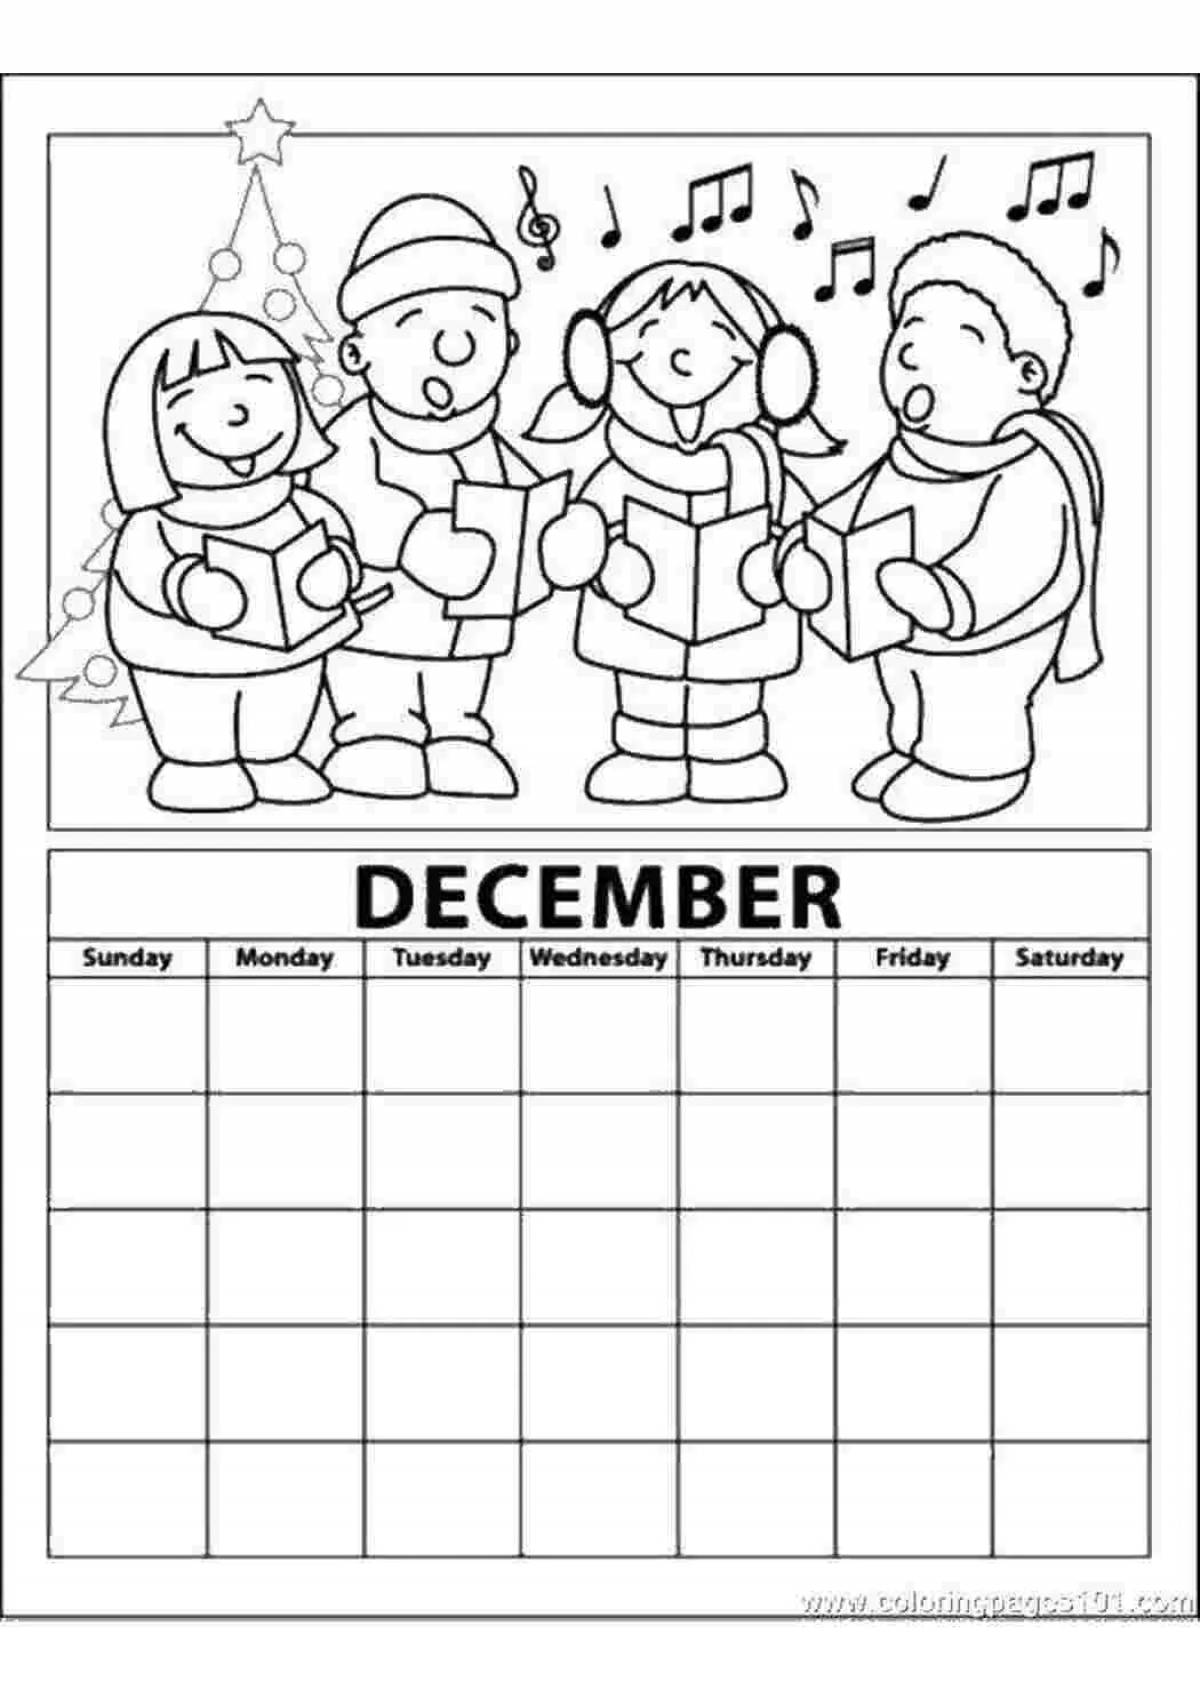 Serene december coloring pages for kids